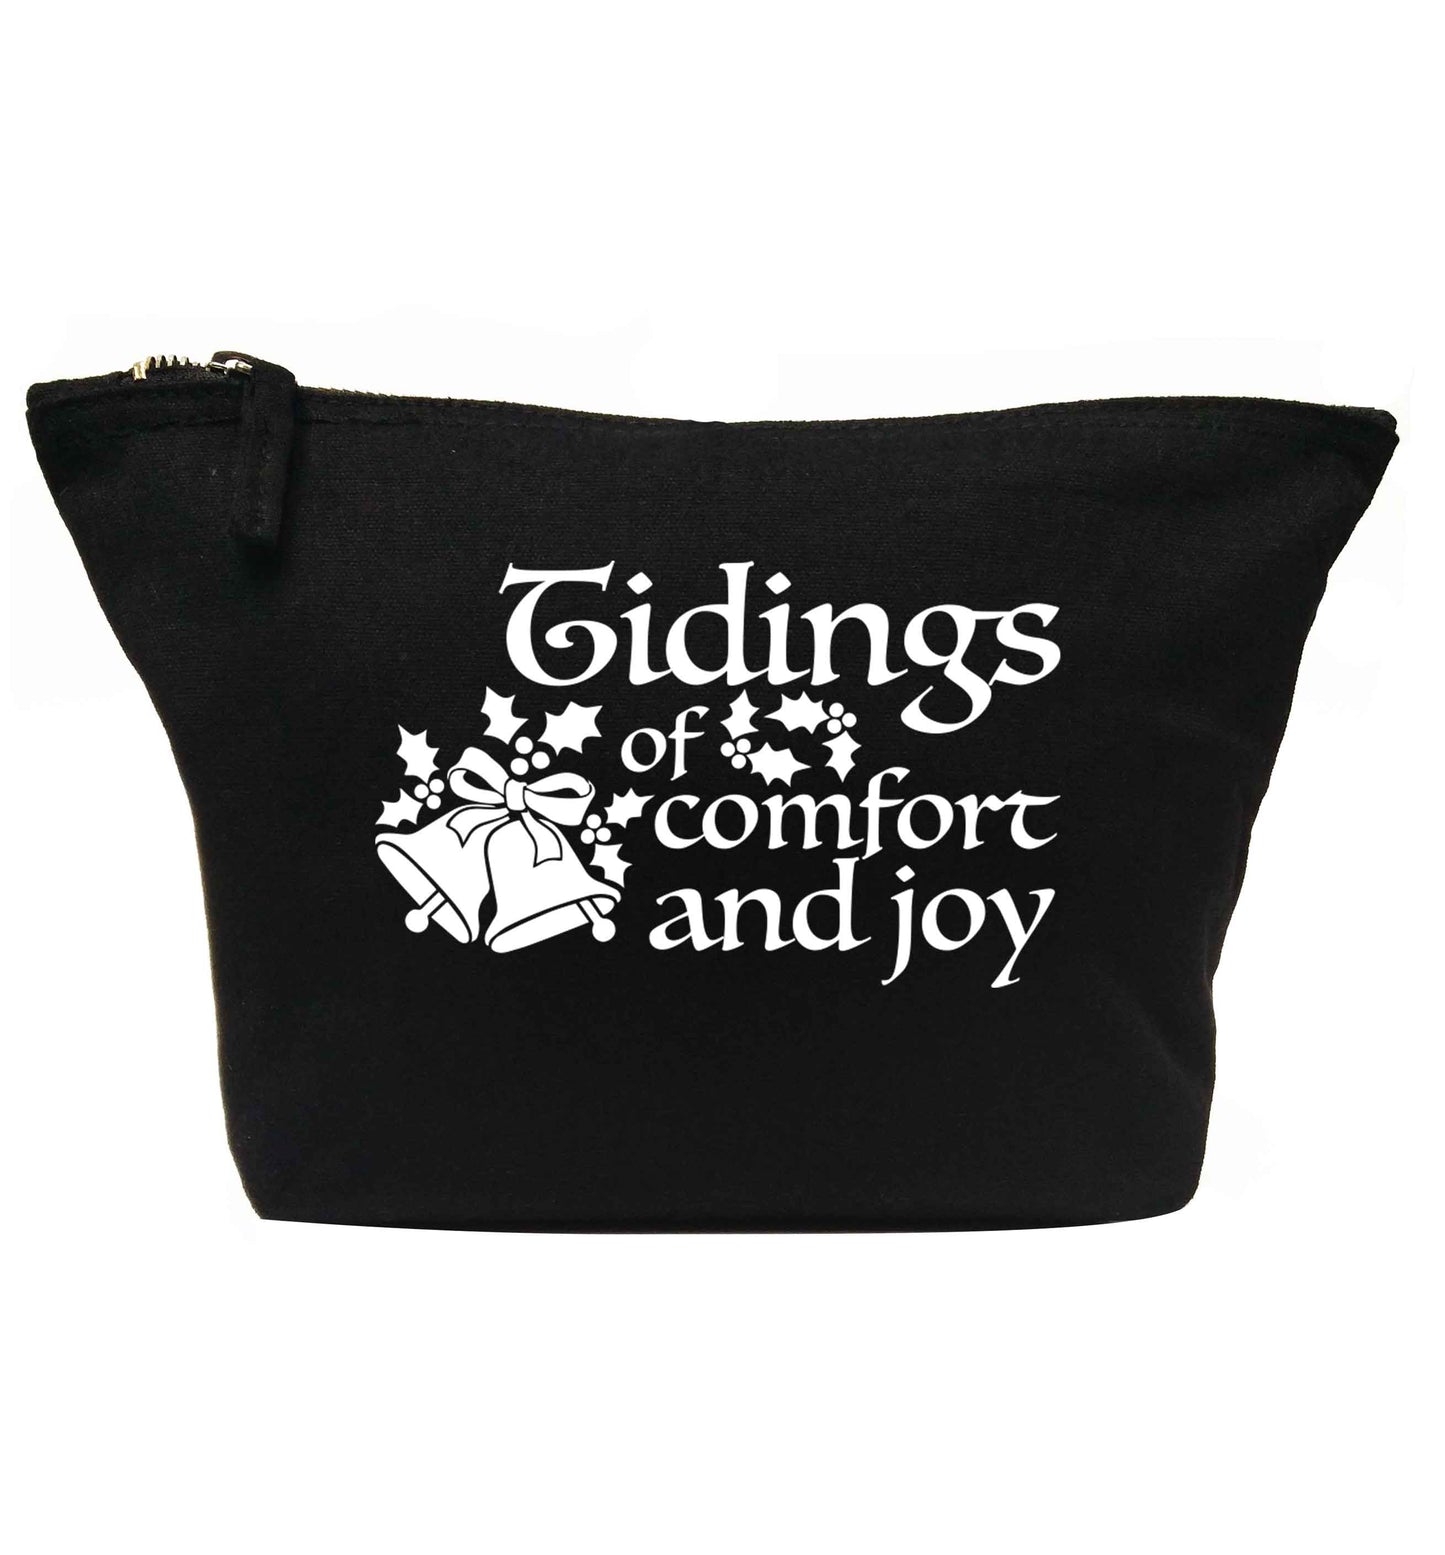 Tidings of comfort and joy | makeup / wash bag